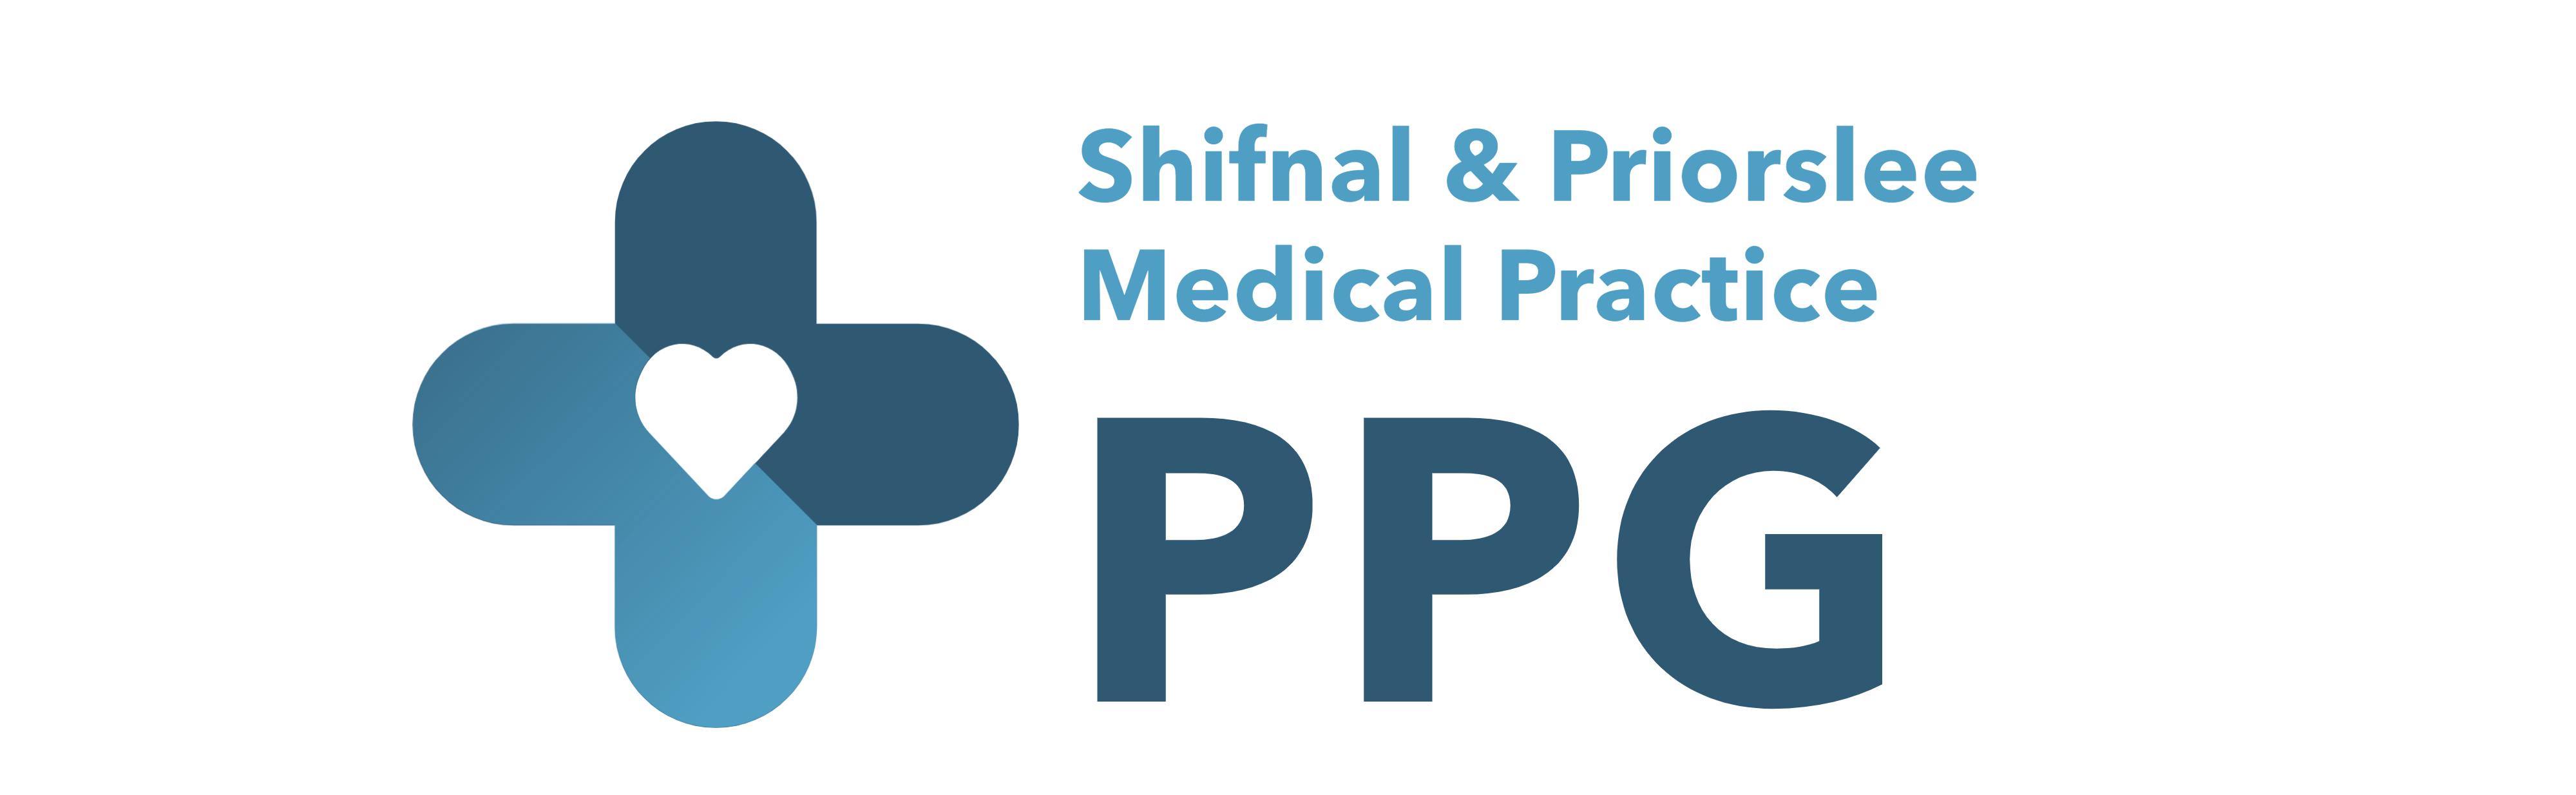 Shifnal & Priorslee Medical Practice PPG